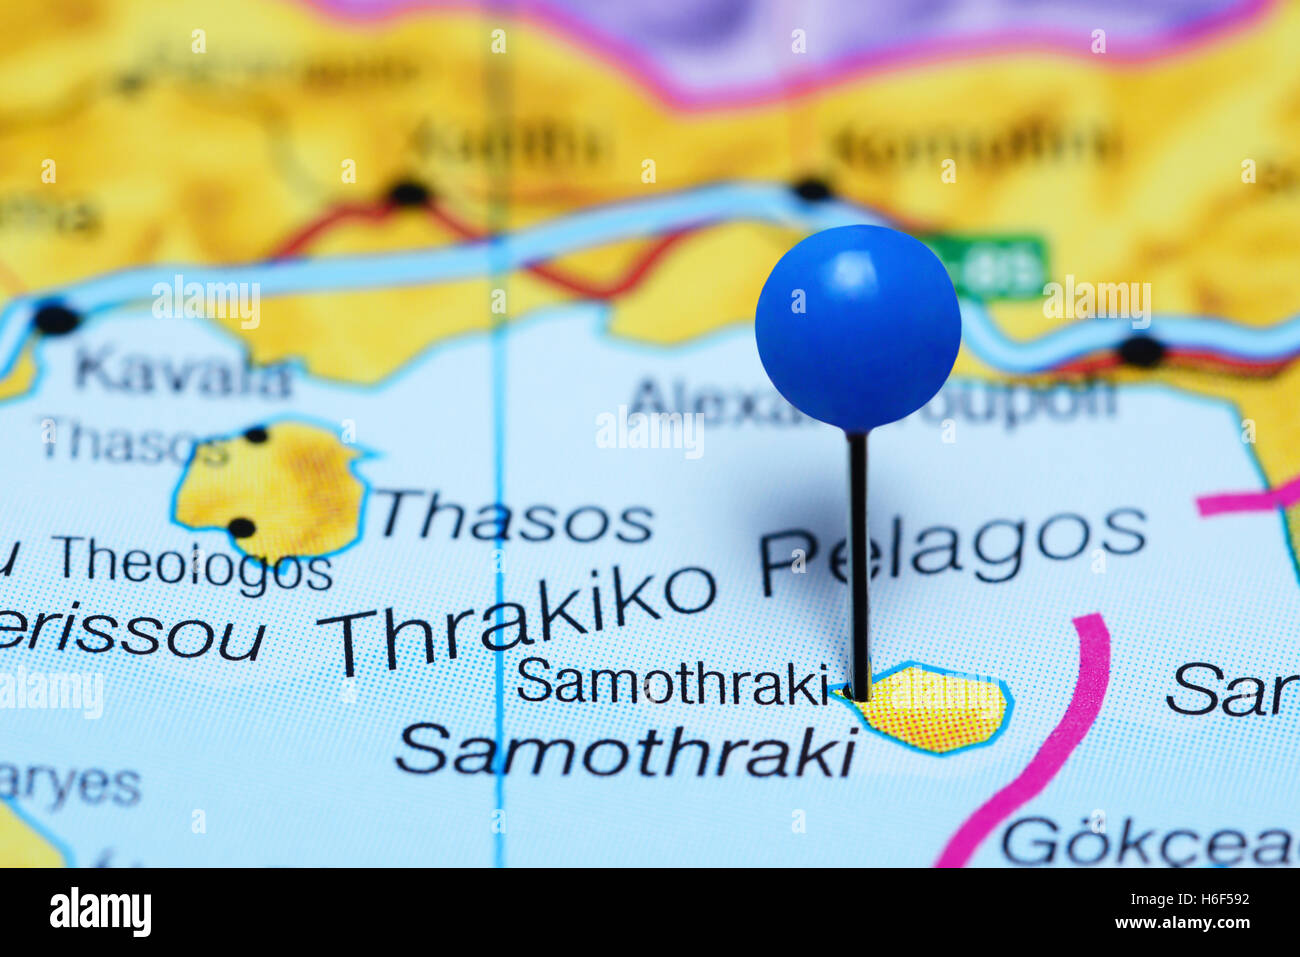 Samothraki pinned on a map of Greece Stock Photo